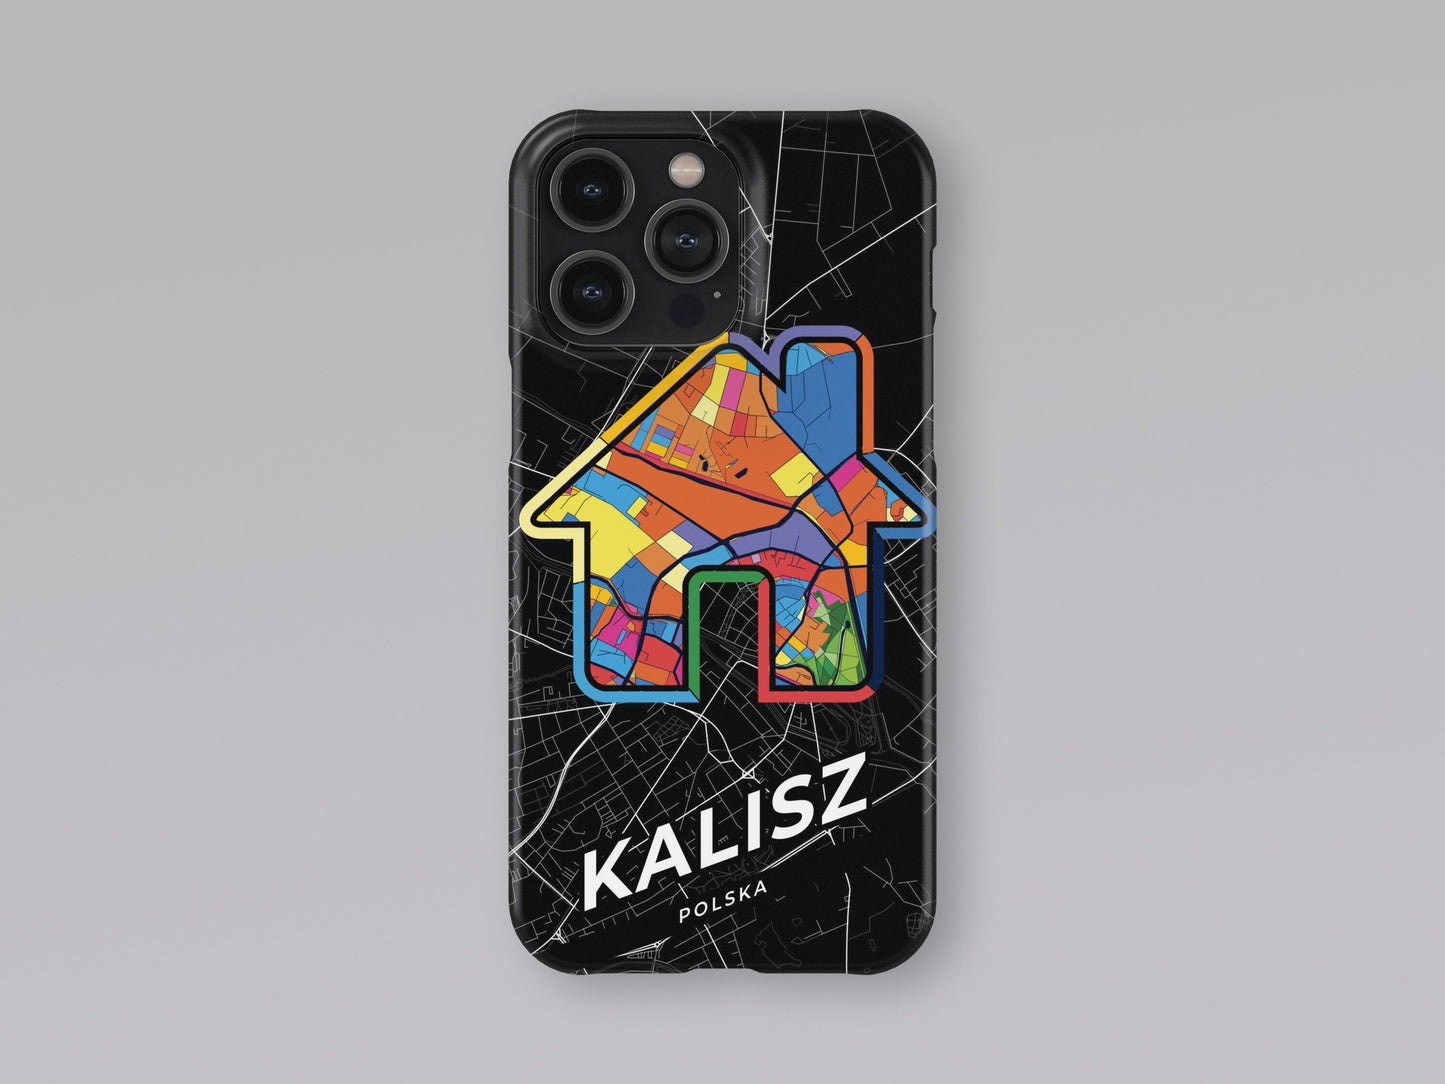 Kalisz Poland slim phone case with colorful icon. Birthday, wedding or housewarming gift. Couple match cases. 3